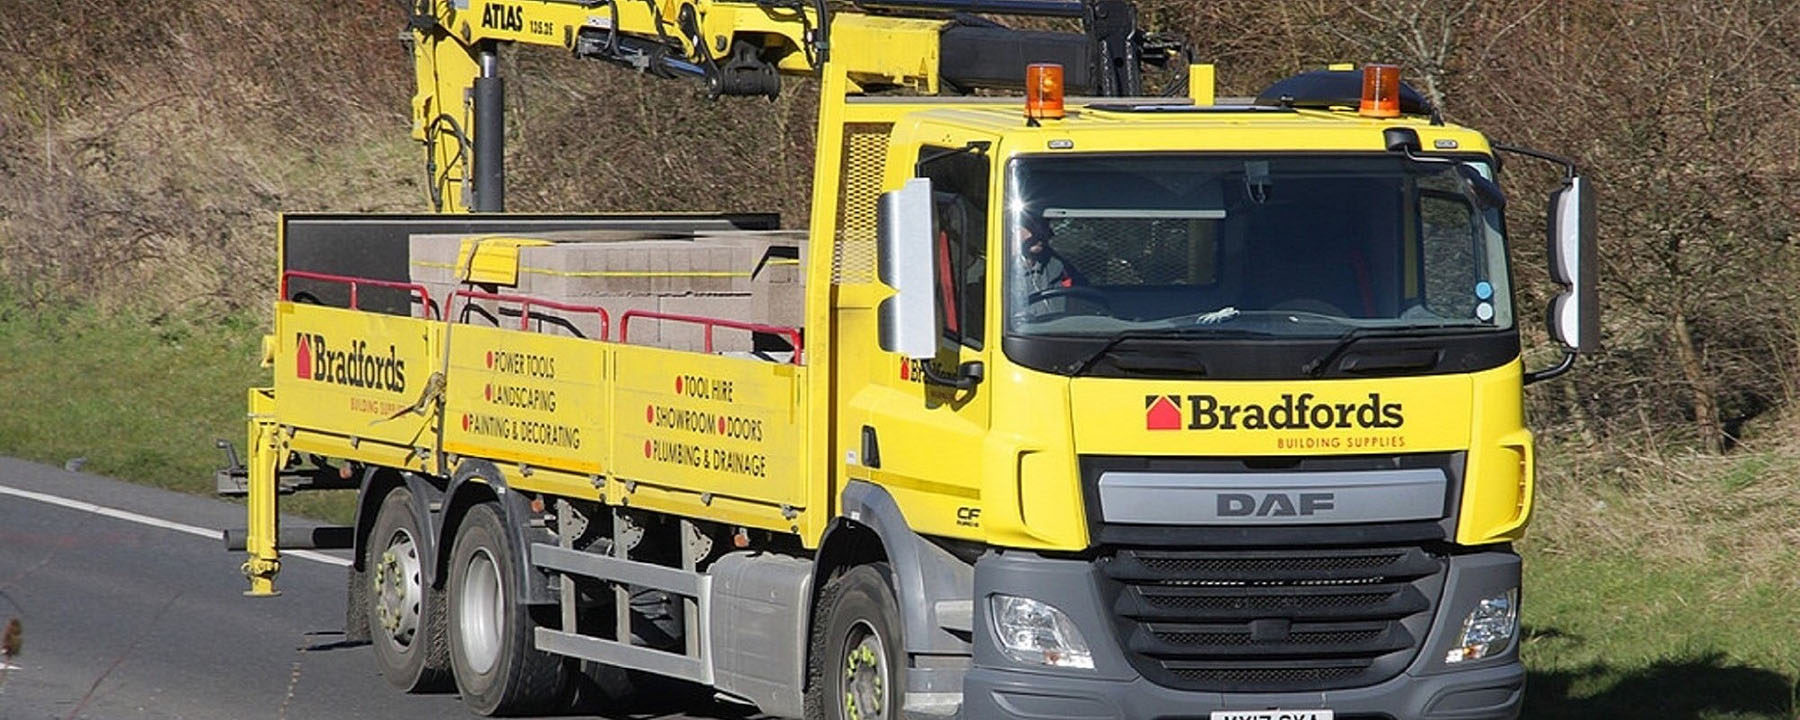 Yellow Bradfords truck